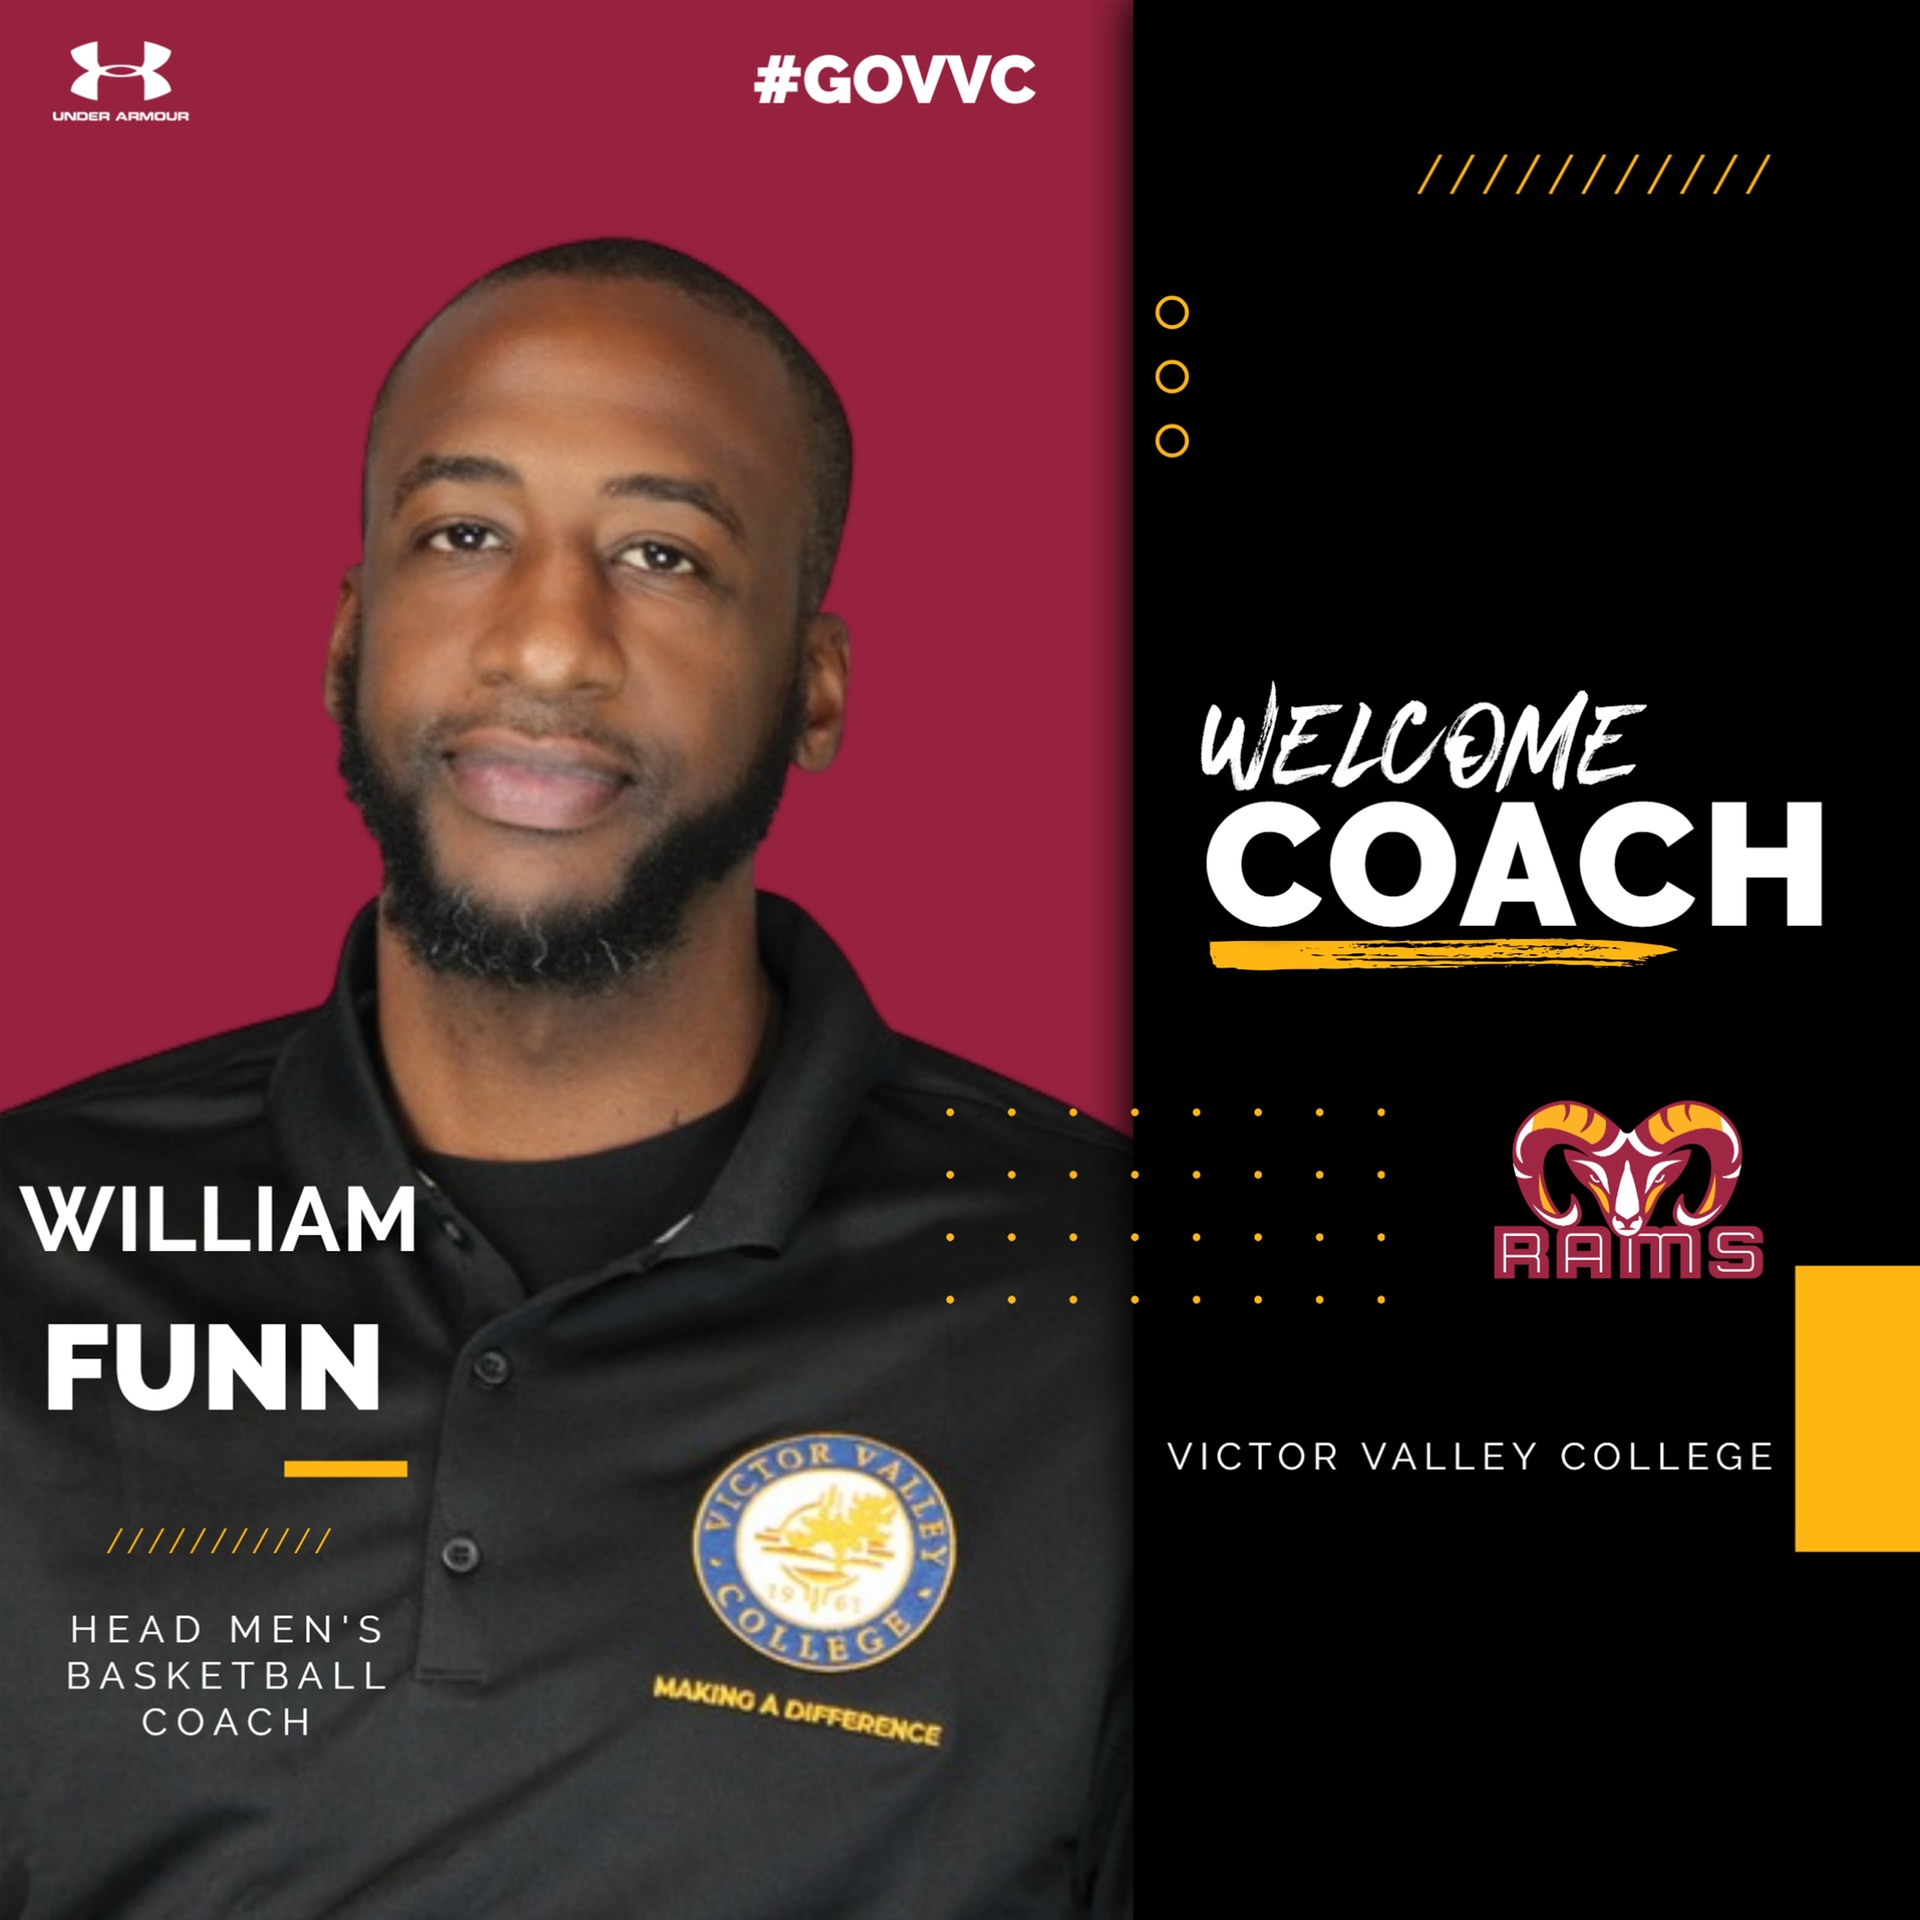 William Funn Takes Over as VVC Men's Basketball Coach